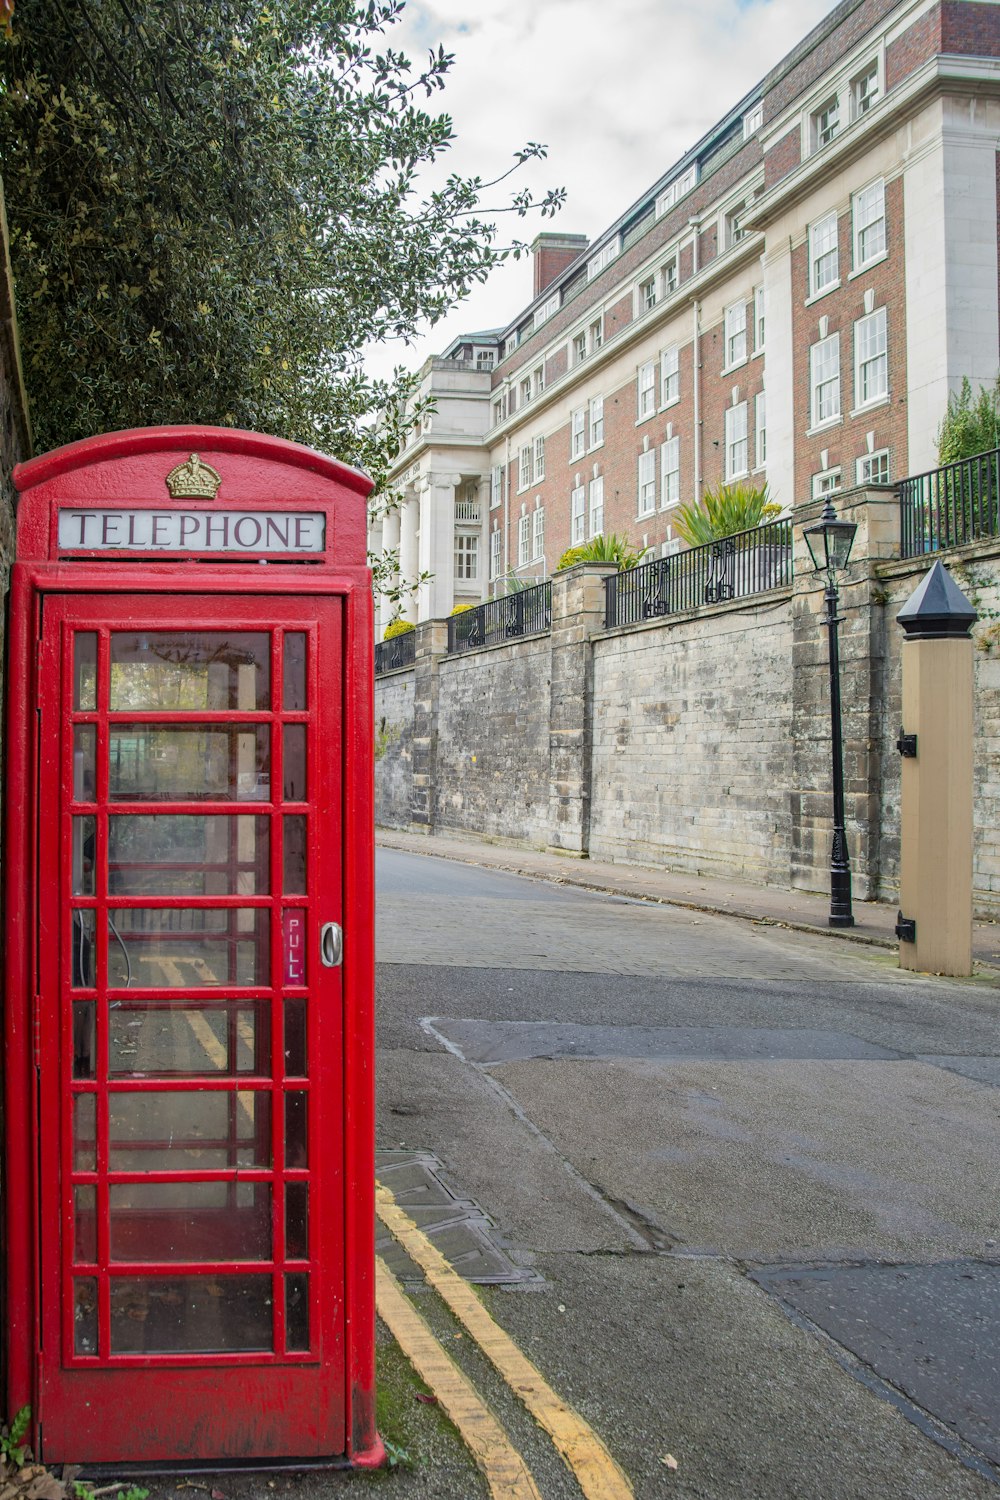 Una cabina telefonica rossa su una strada